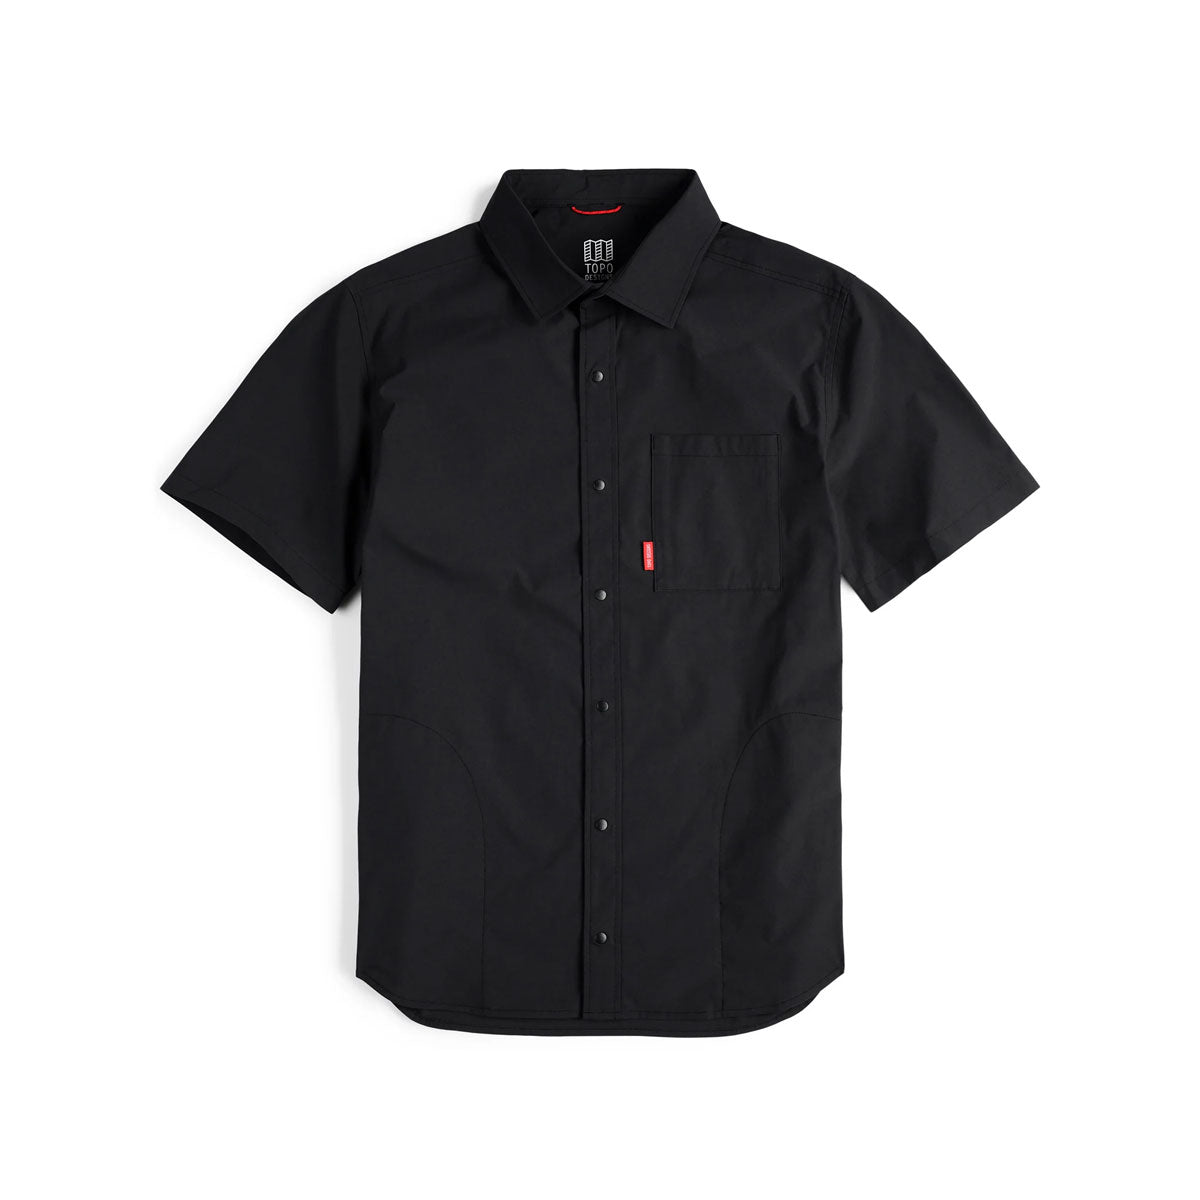 Topo Designs : Global Shirt - Short Sleeve : Black